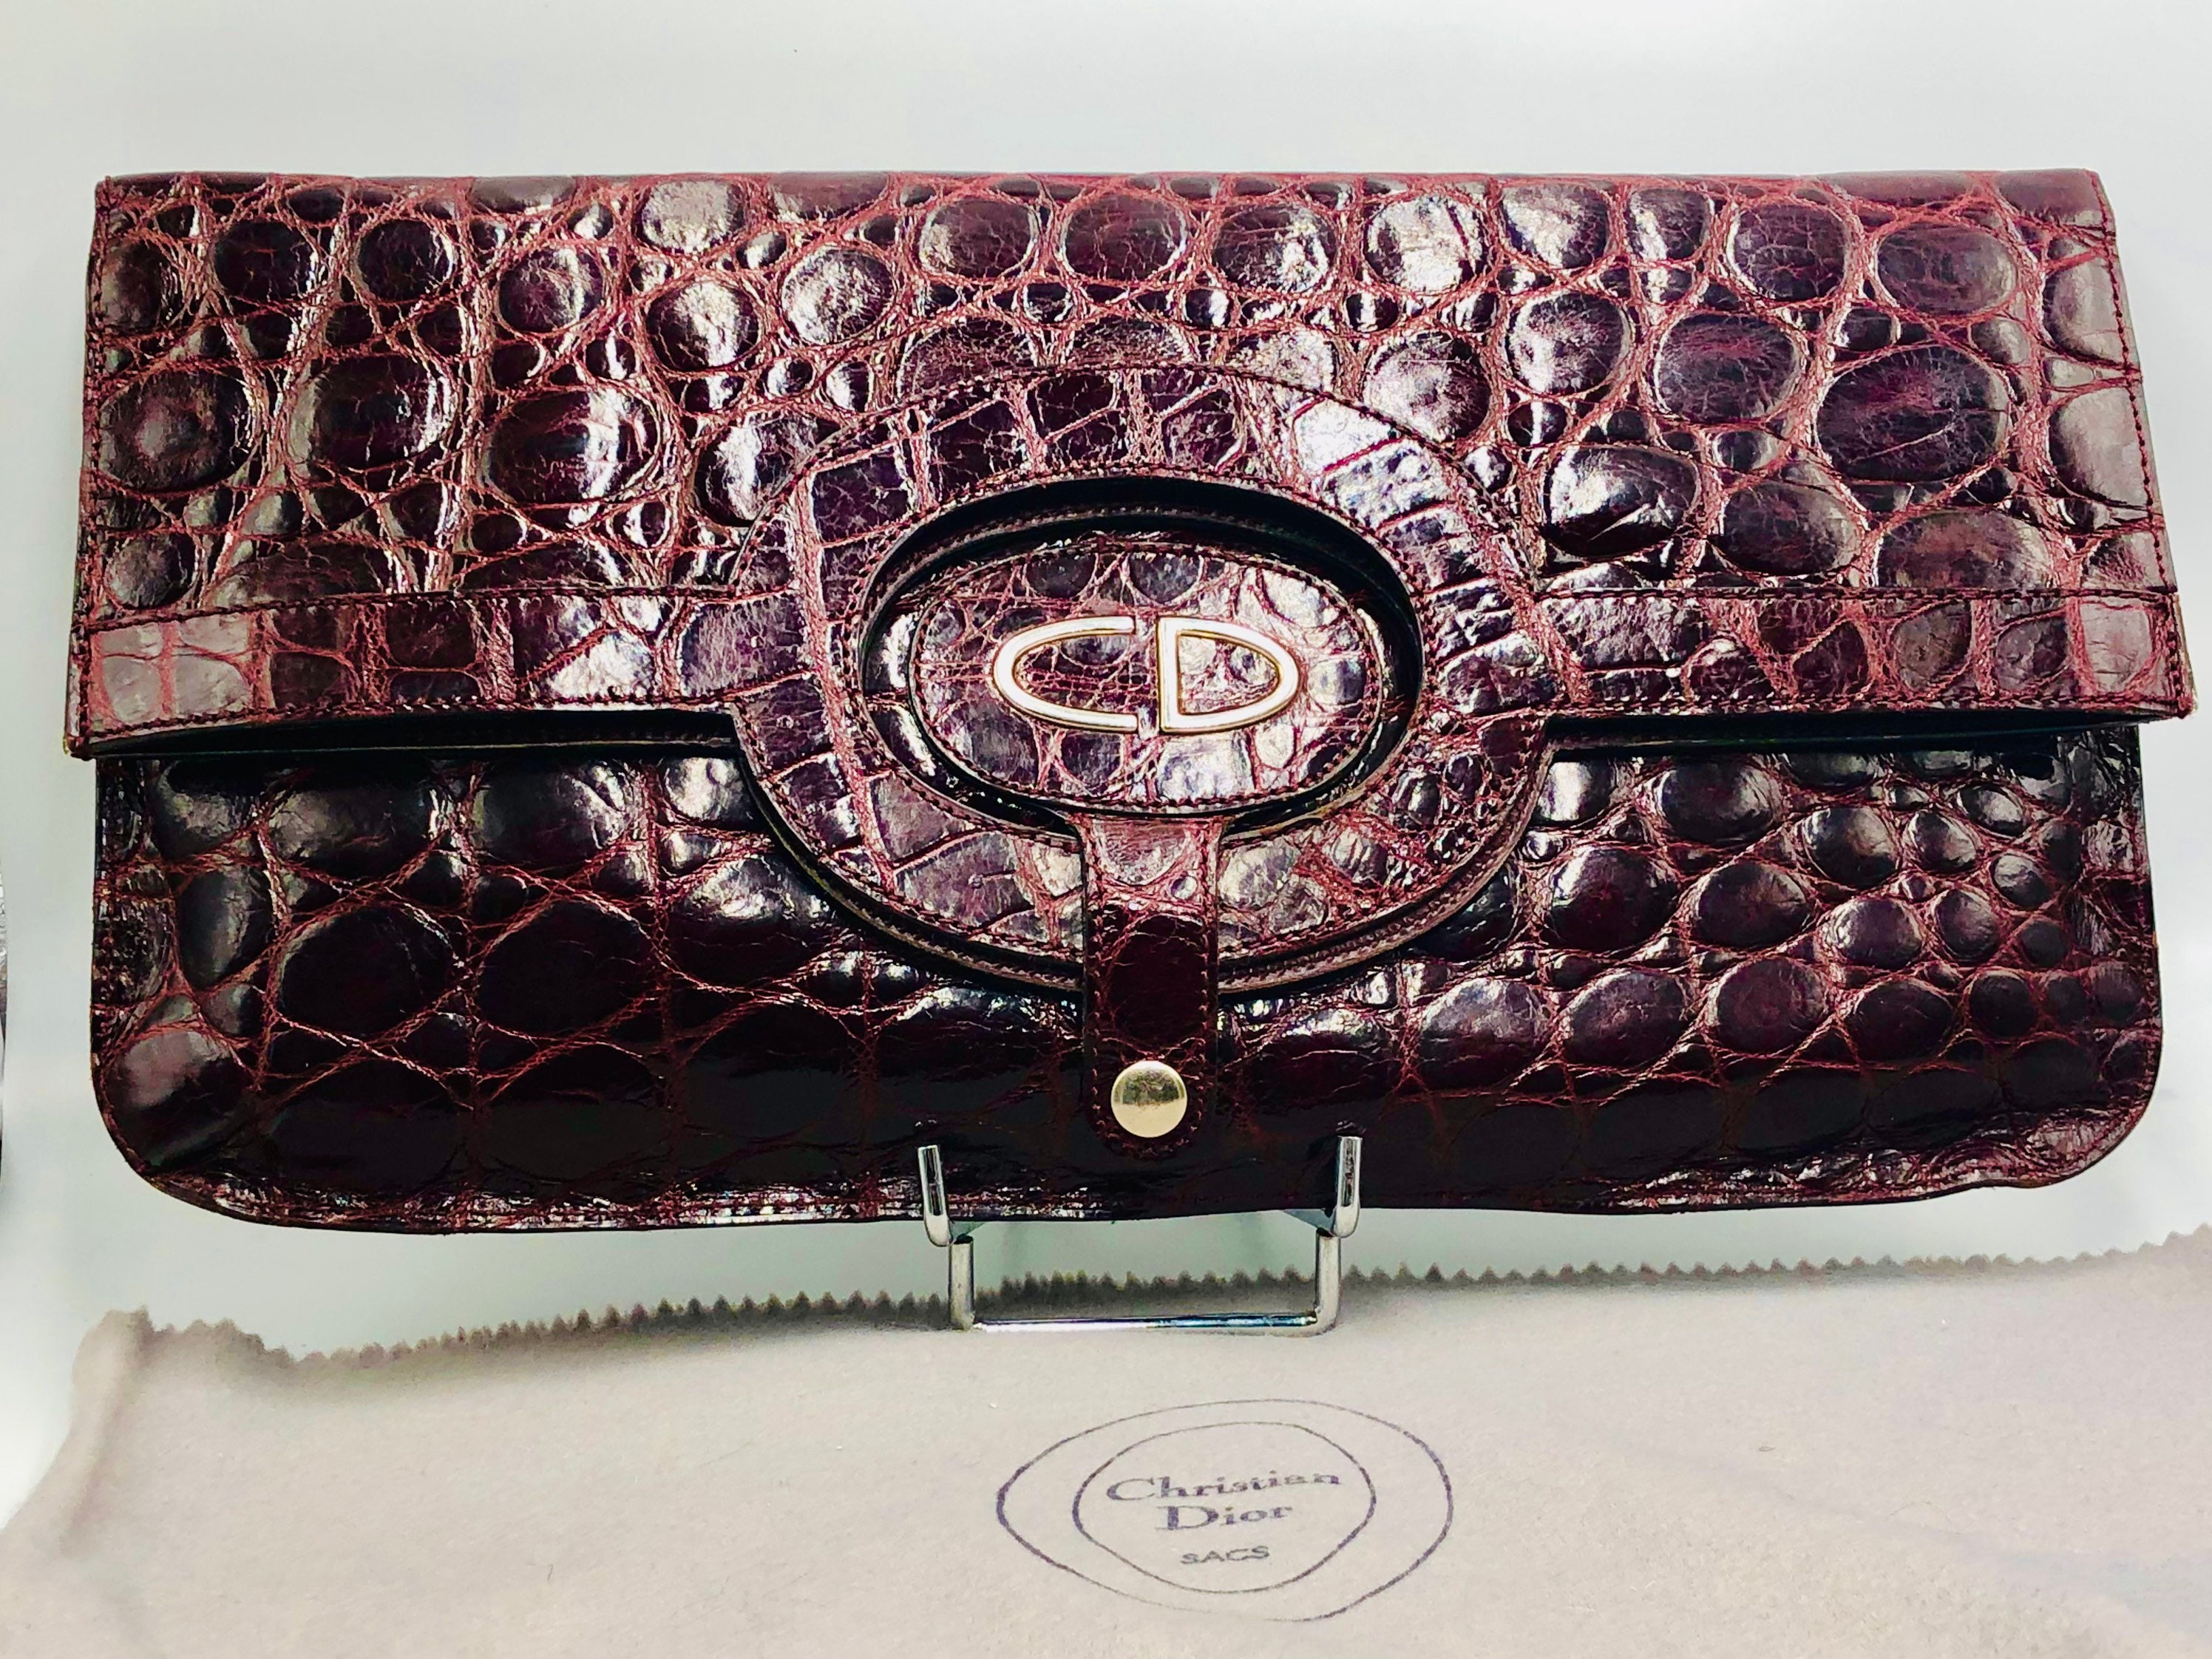 Sold at Auction: Rare Vintage Christian Dior Baby Crocodile Bag/Pochette